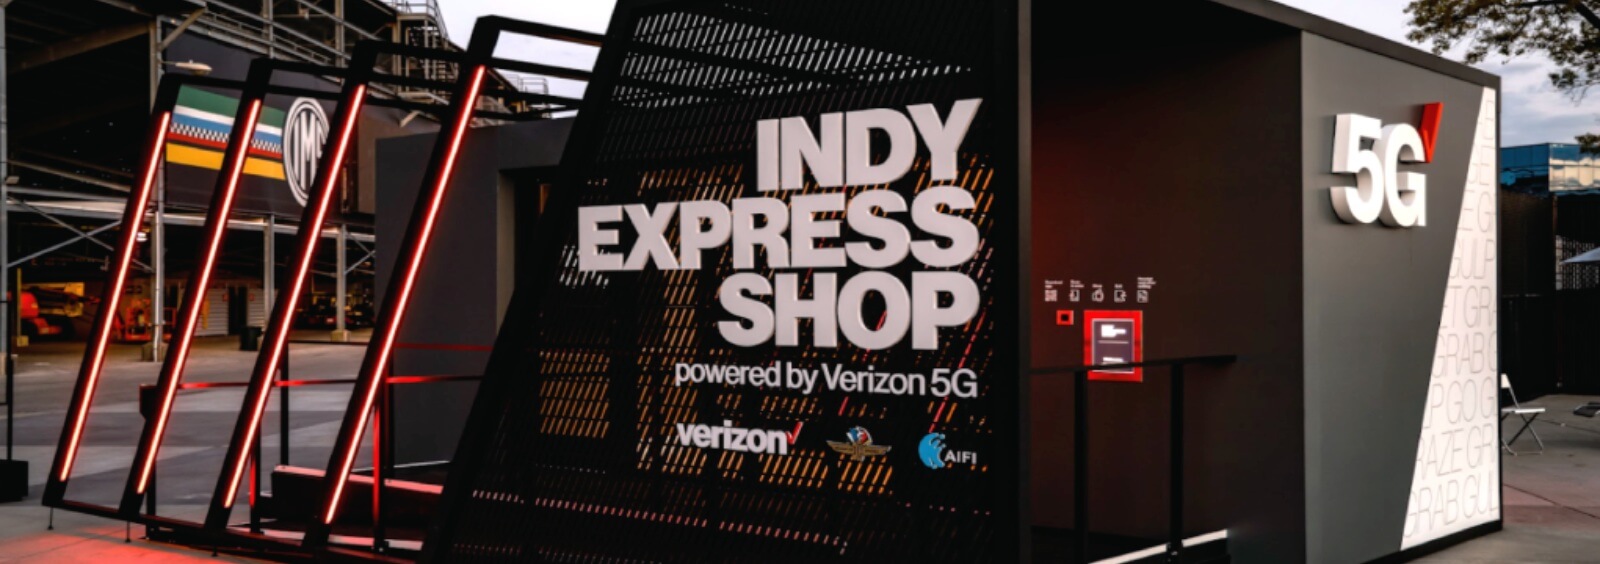 Indy Express Shop